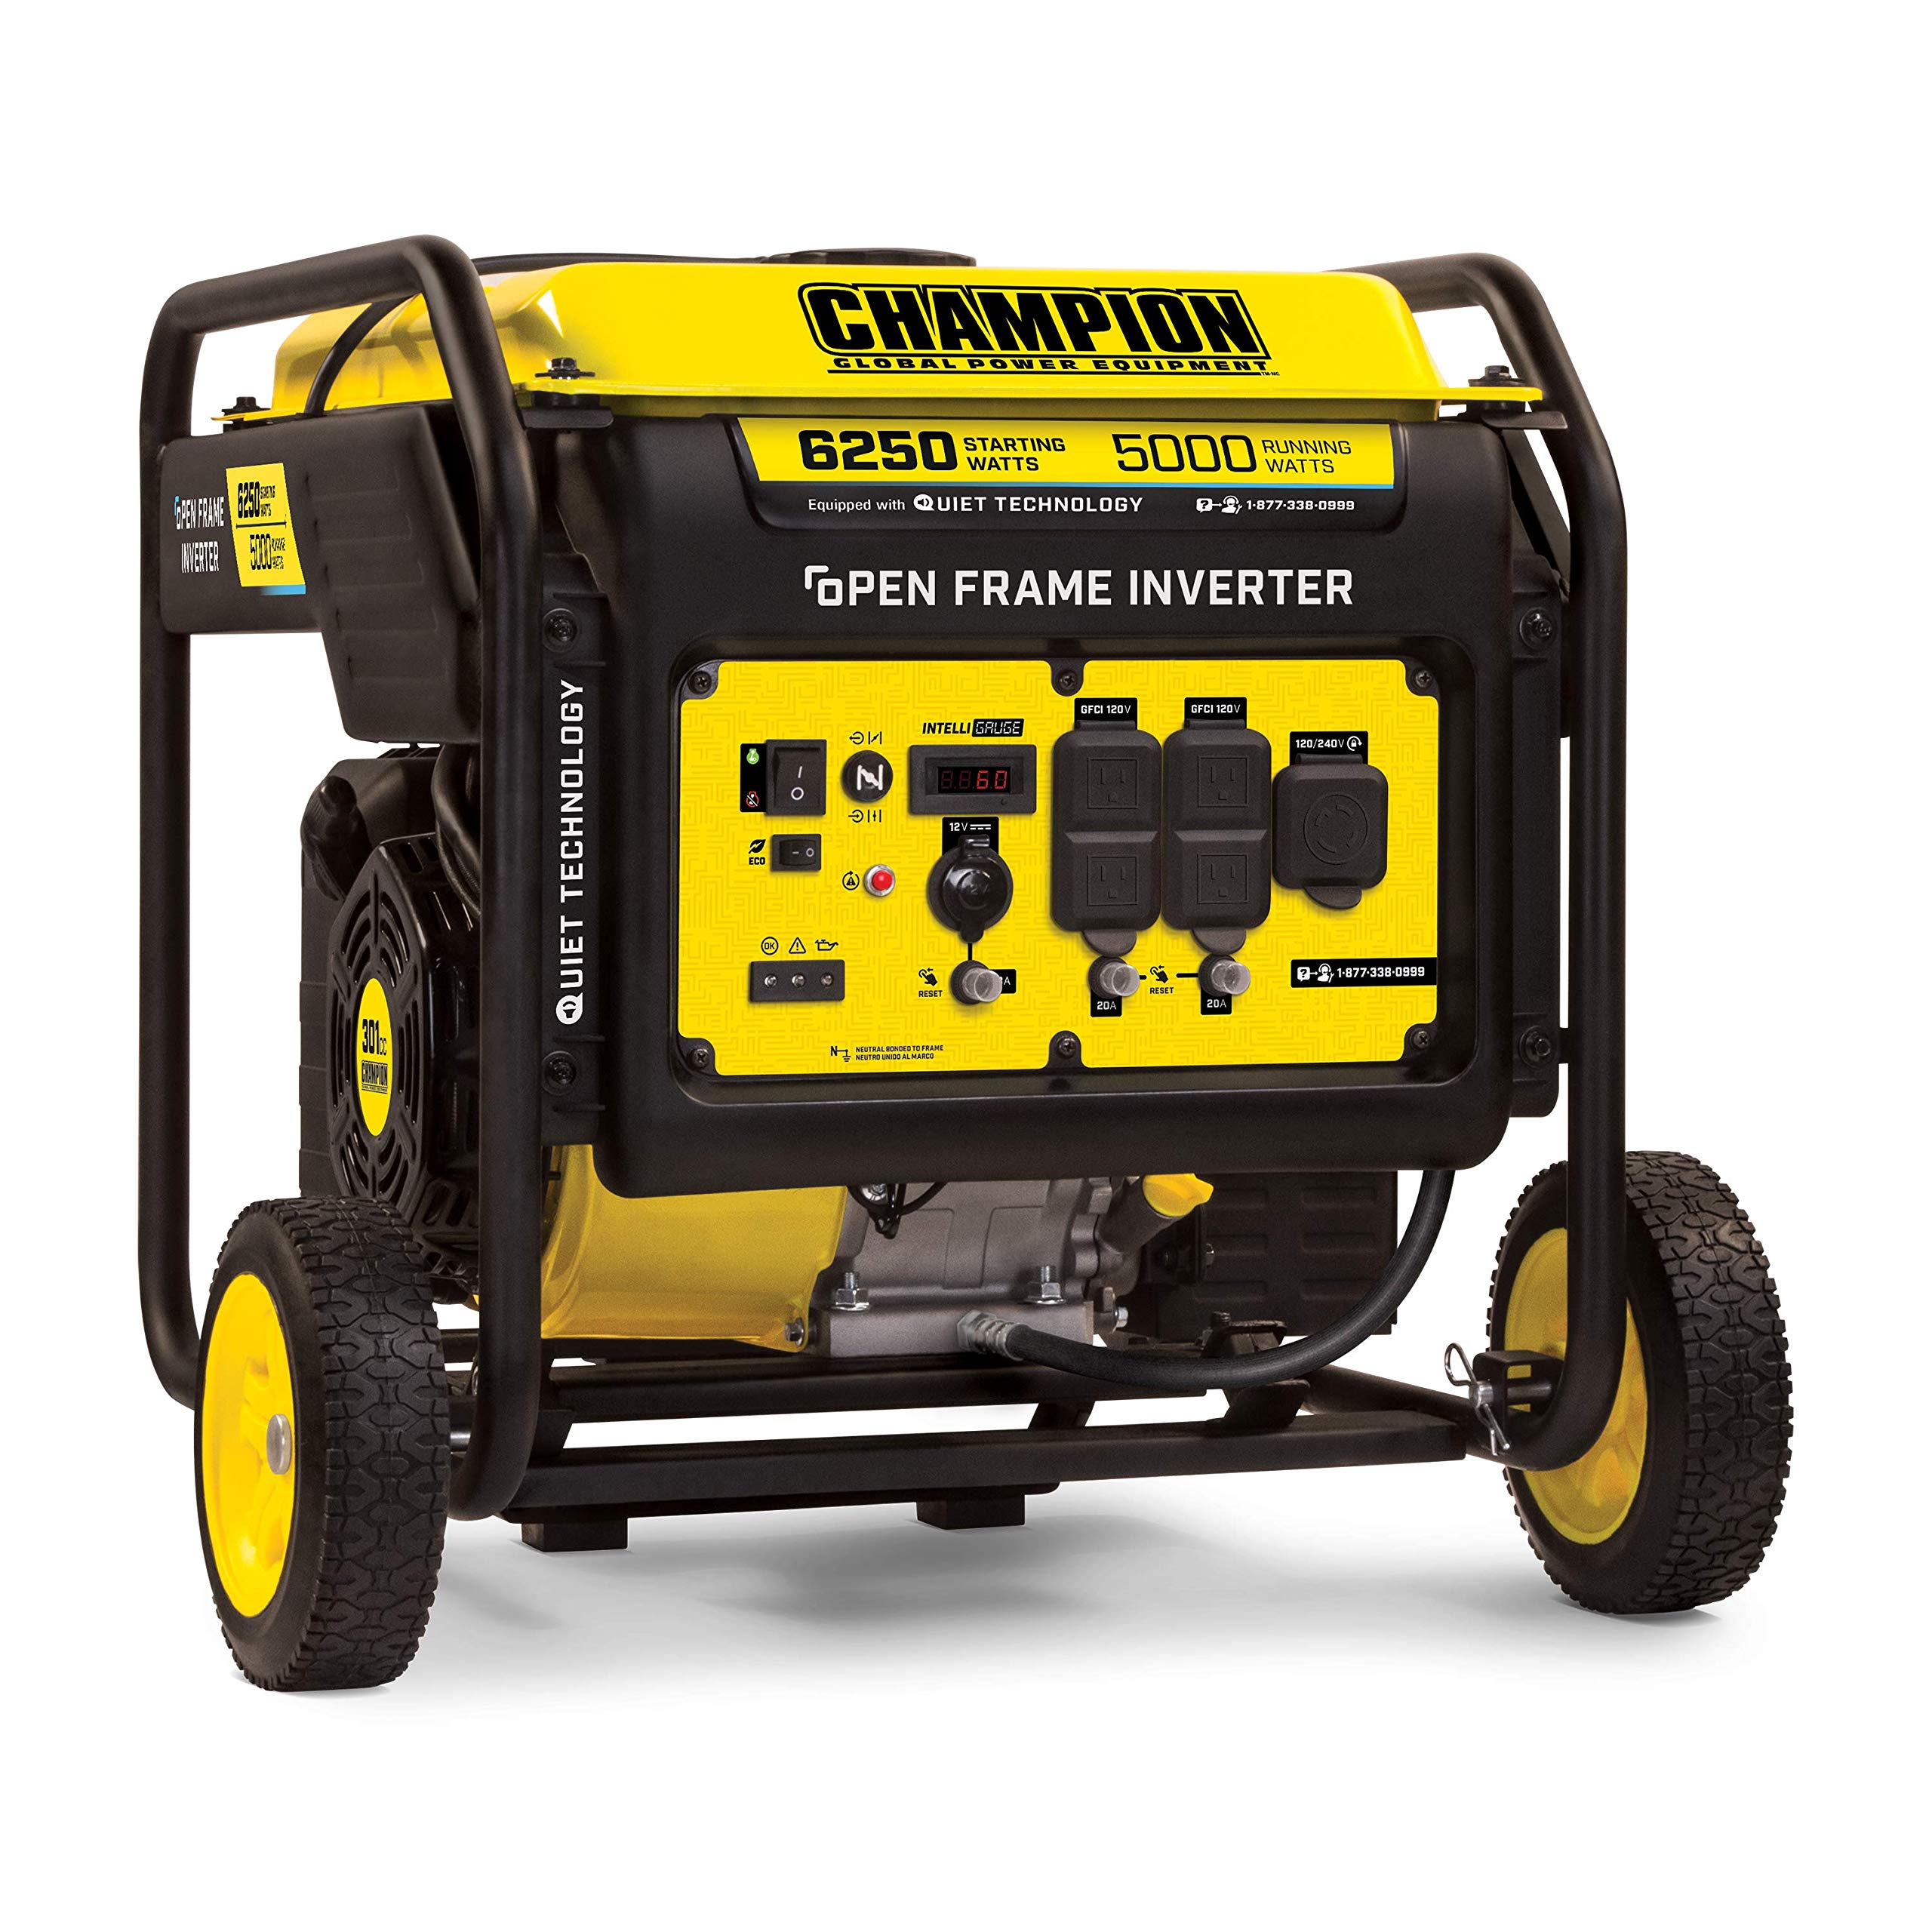 Champion 100519 240 volt 6250-5000 Watt  - transfer switch ready back-up generator with Wheel kit $519.13  A/C- YMMV price fluctuates  f/s Amazon